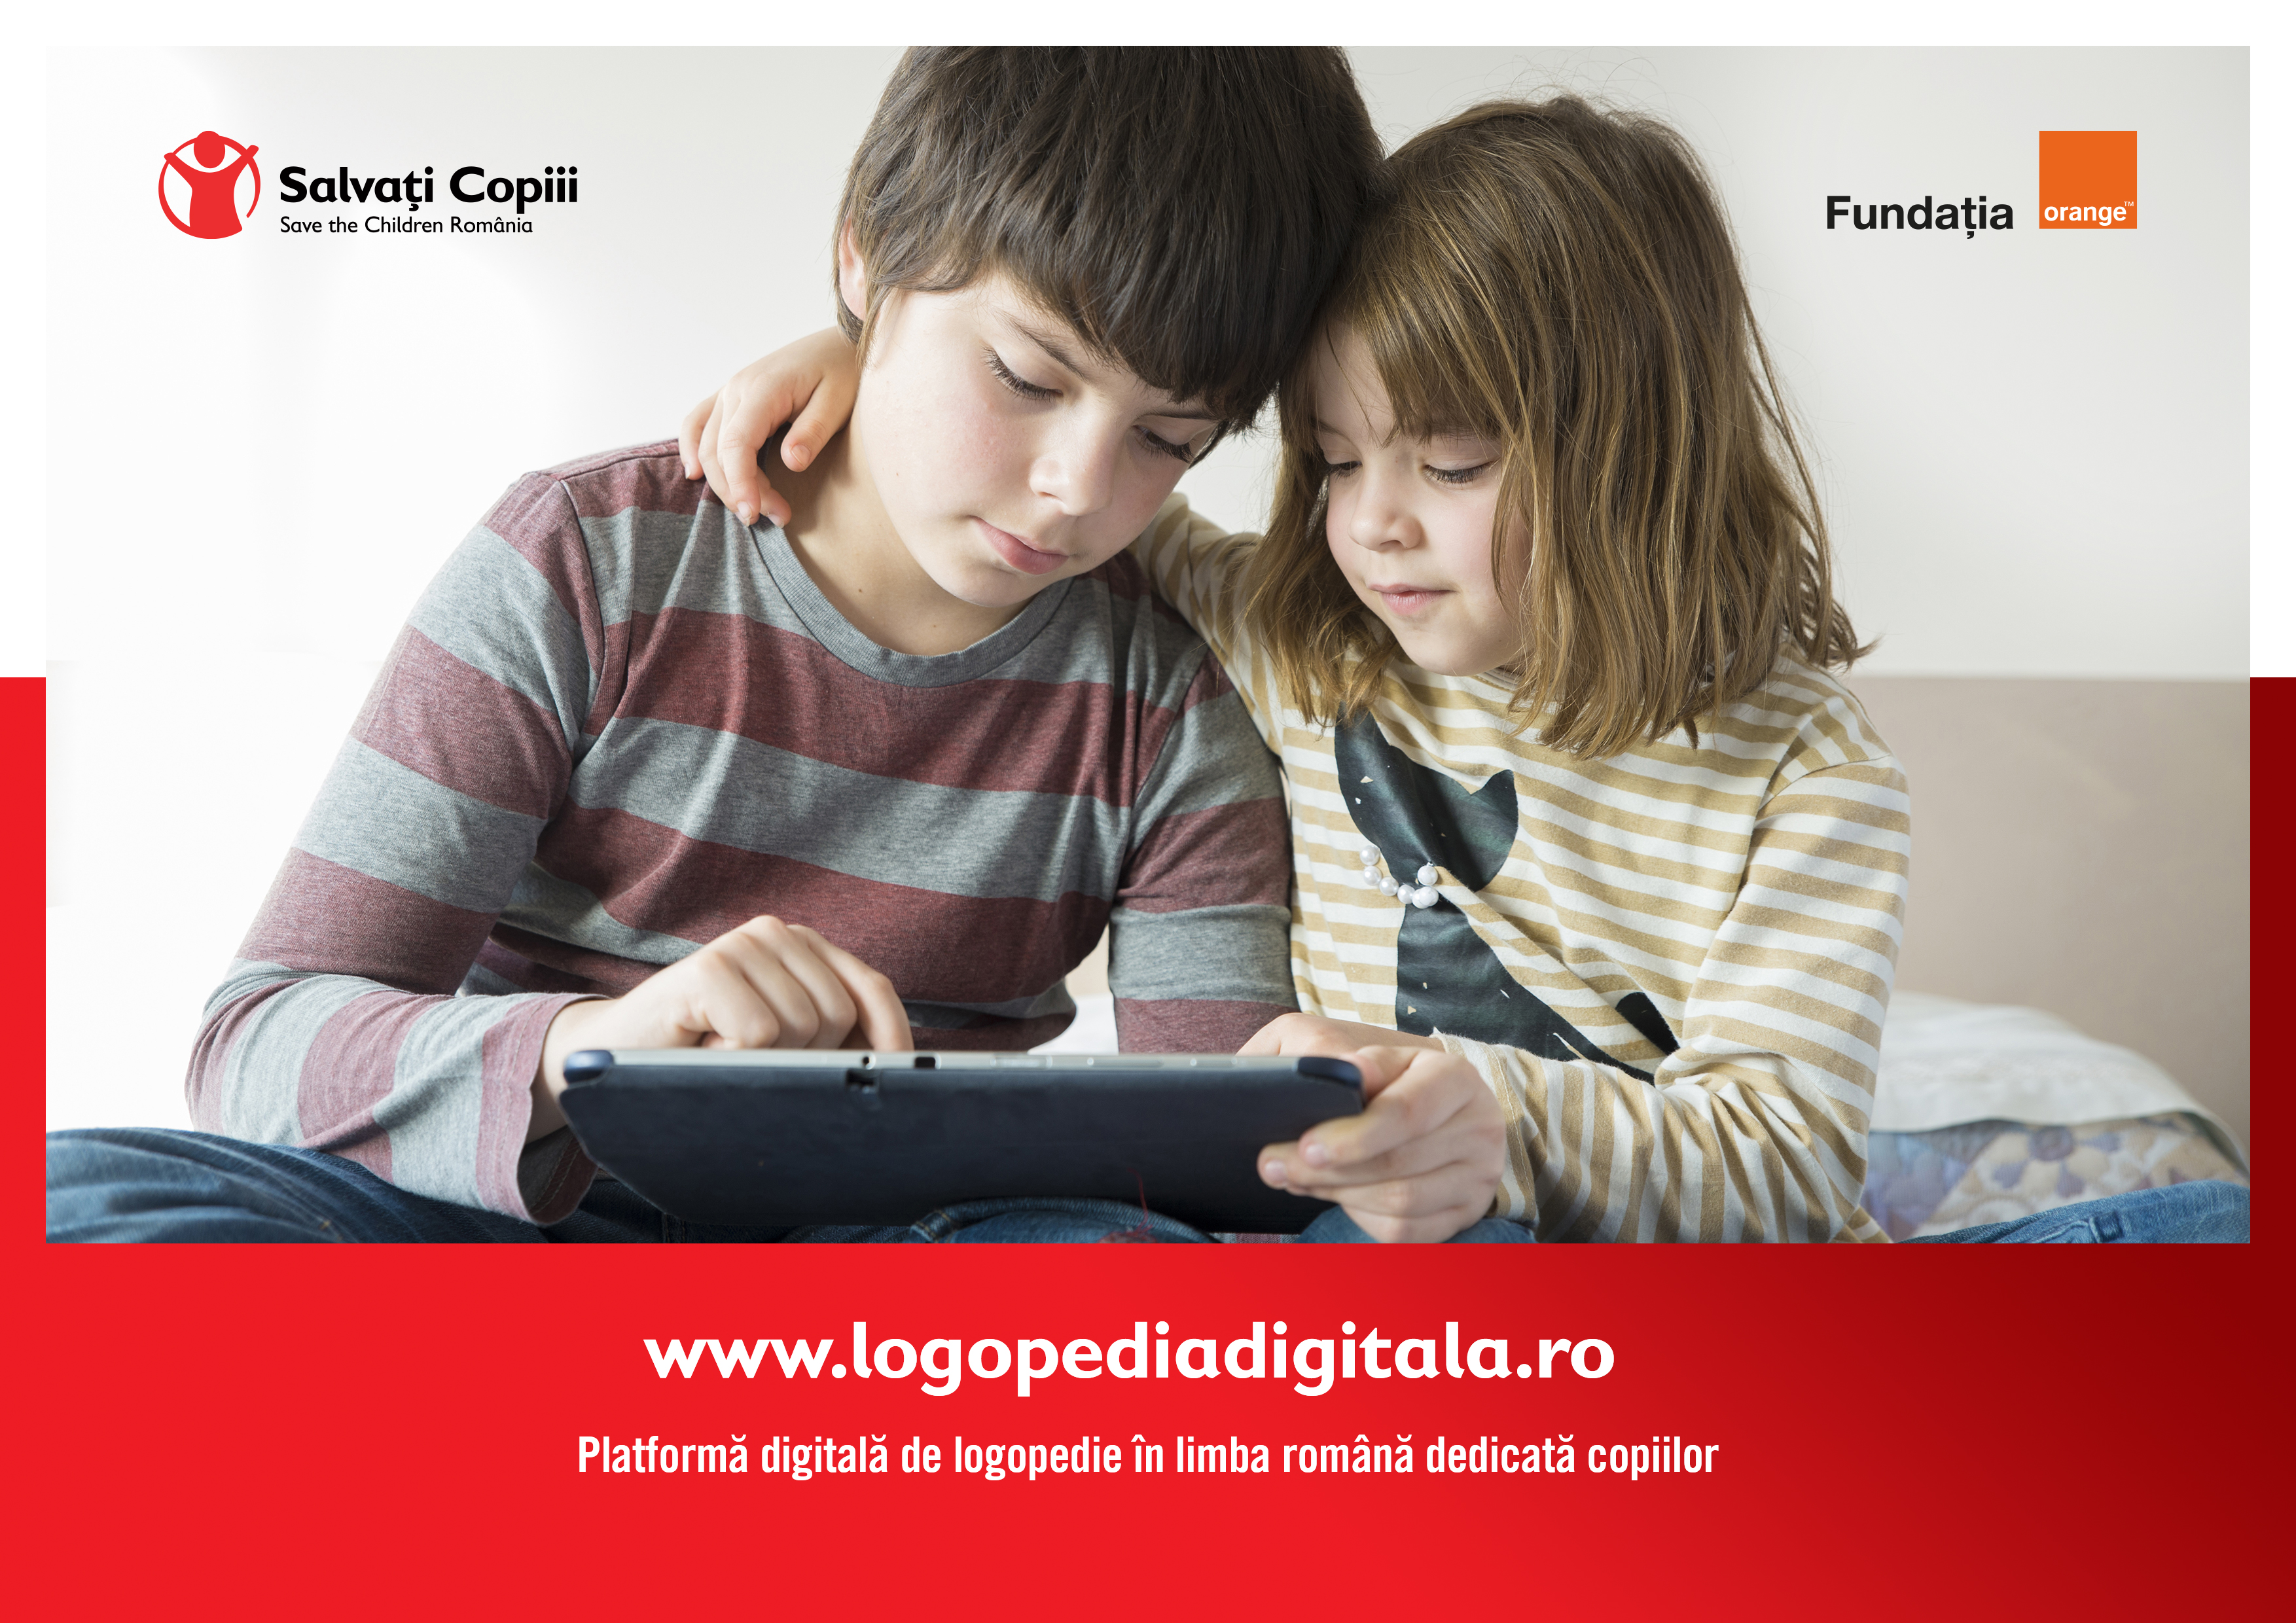 Logopedia Digitala